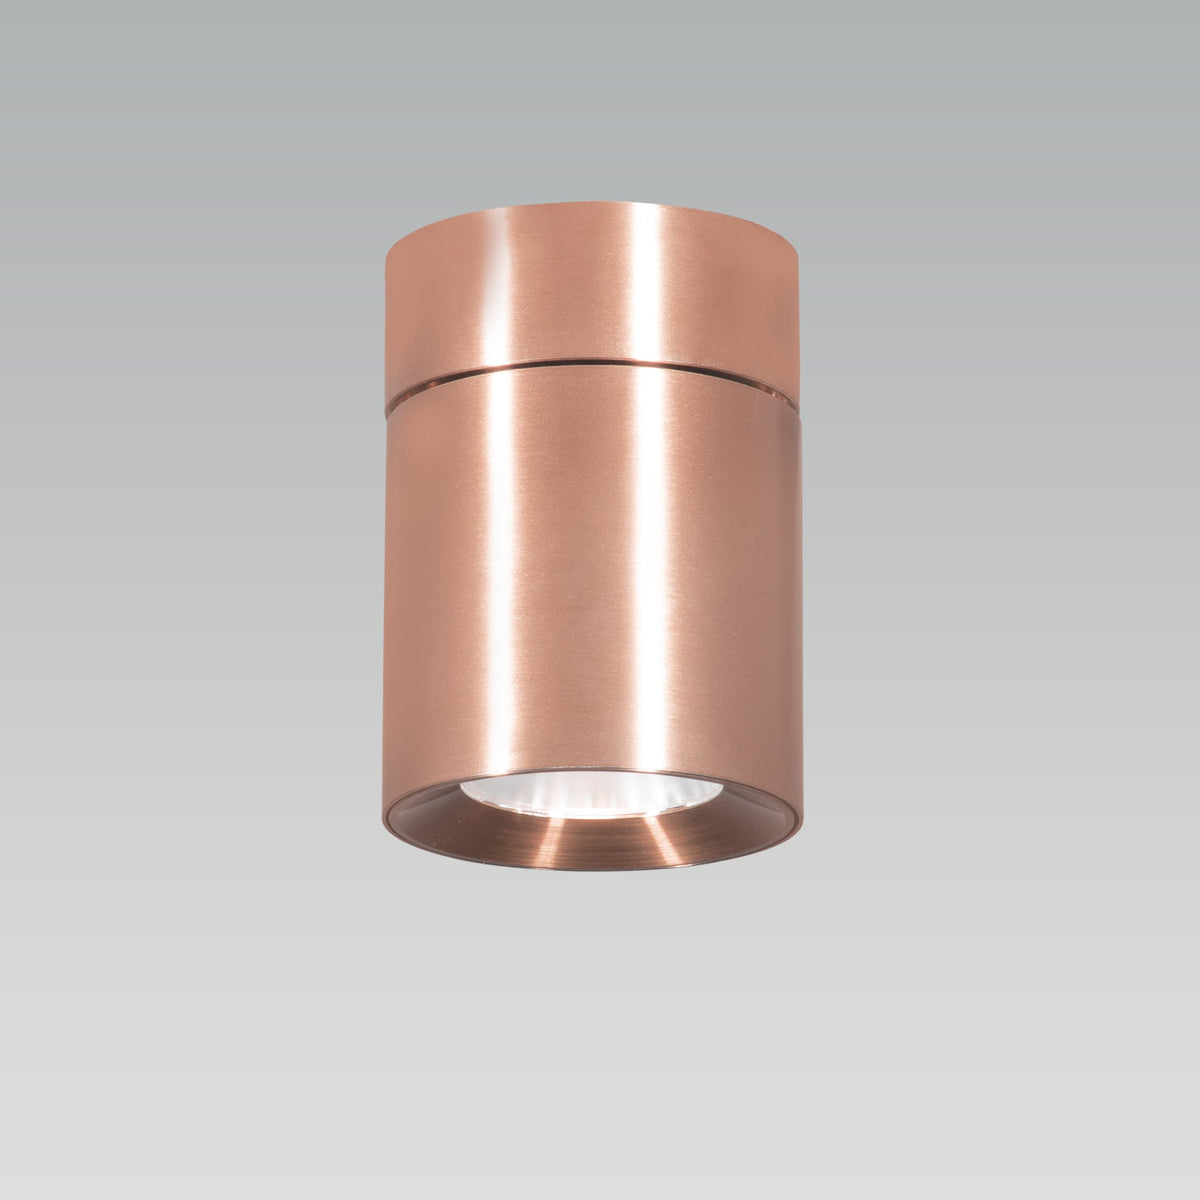 Veyron Copper Adjustable LED Spot Light online